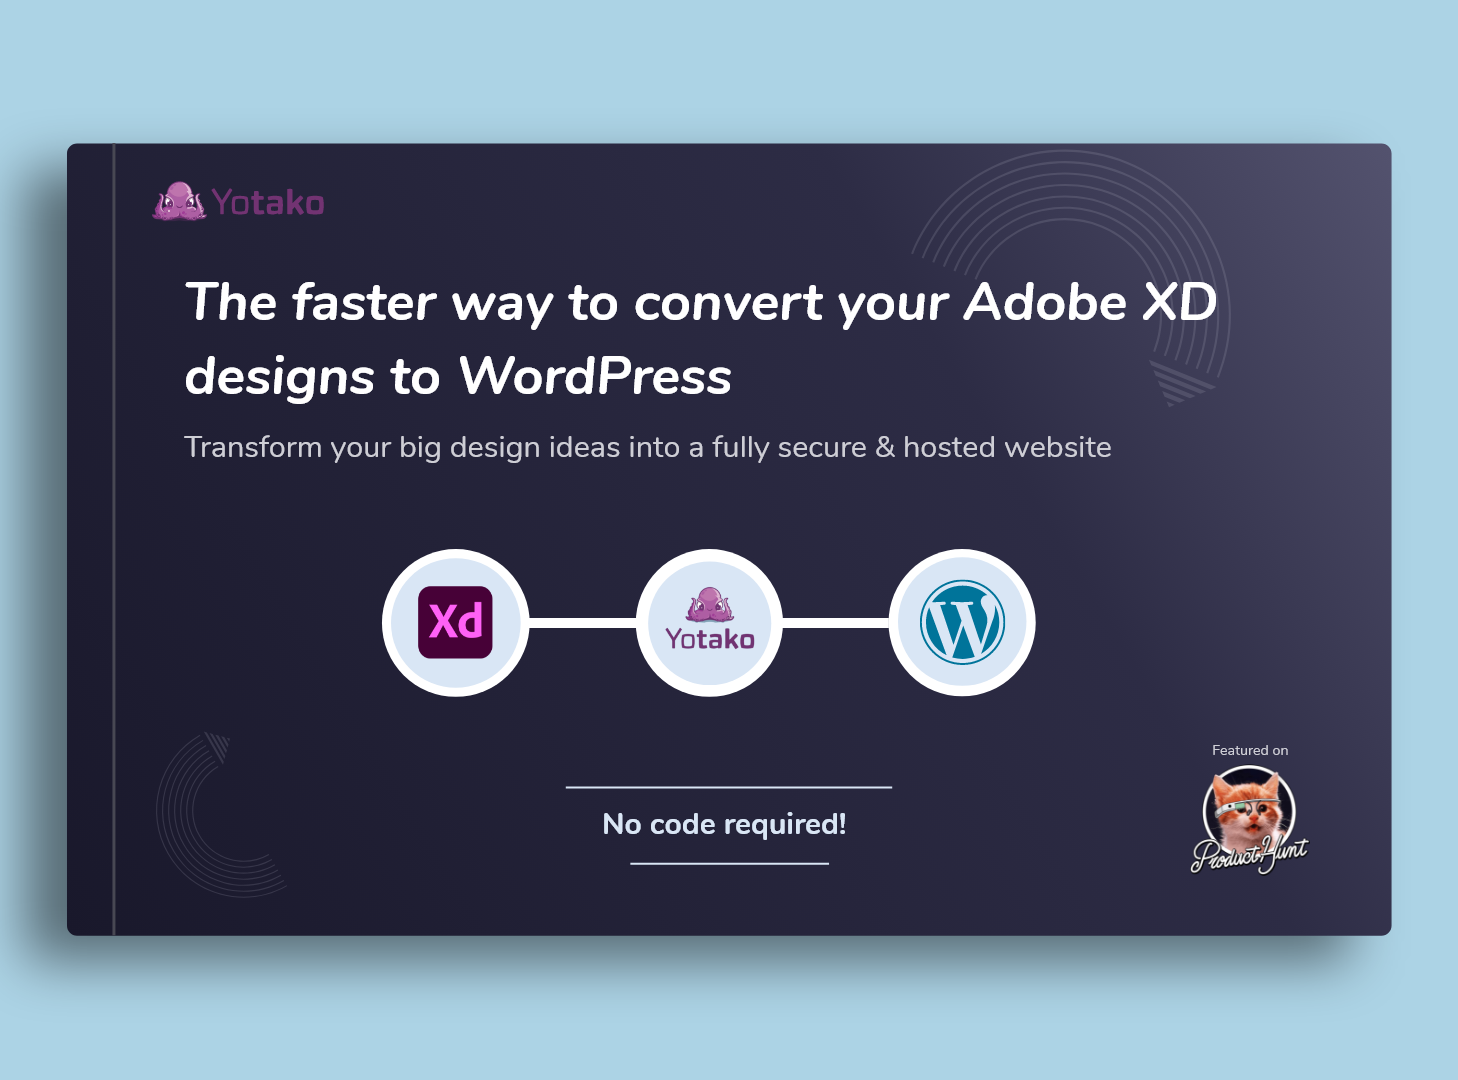 Adobe to WordPress in a click!